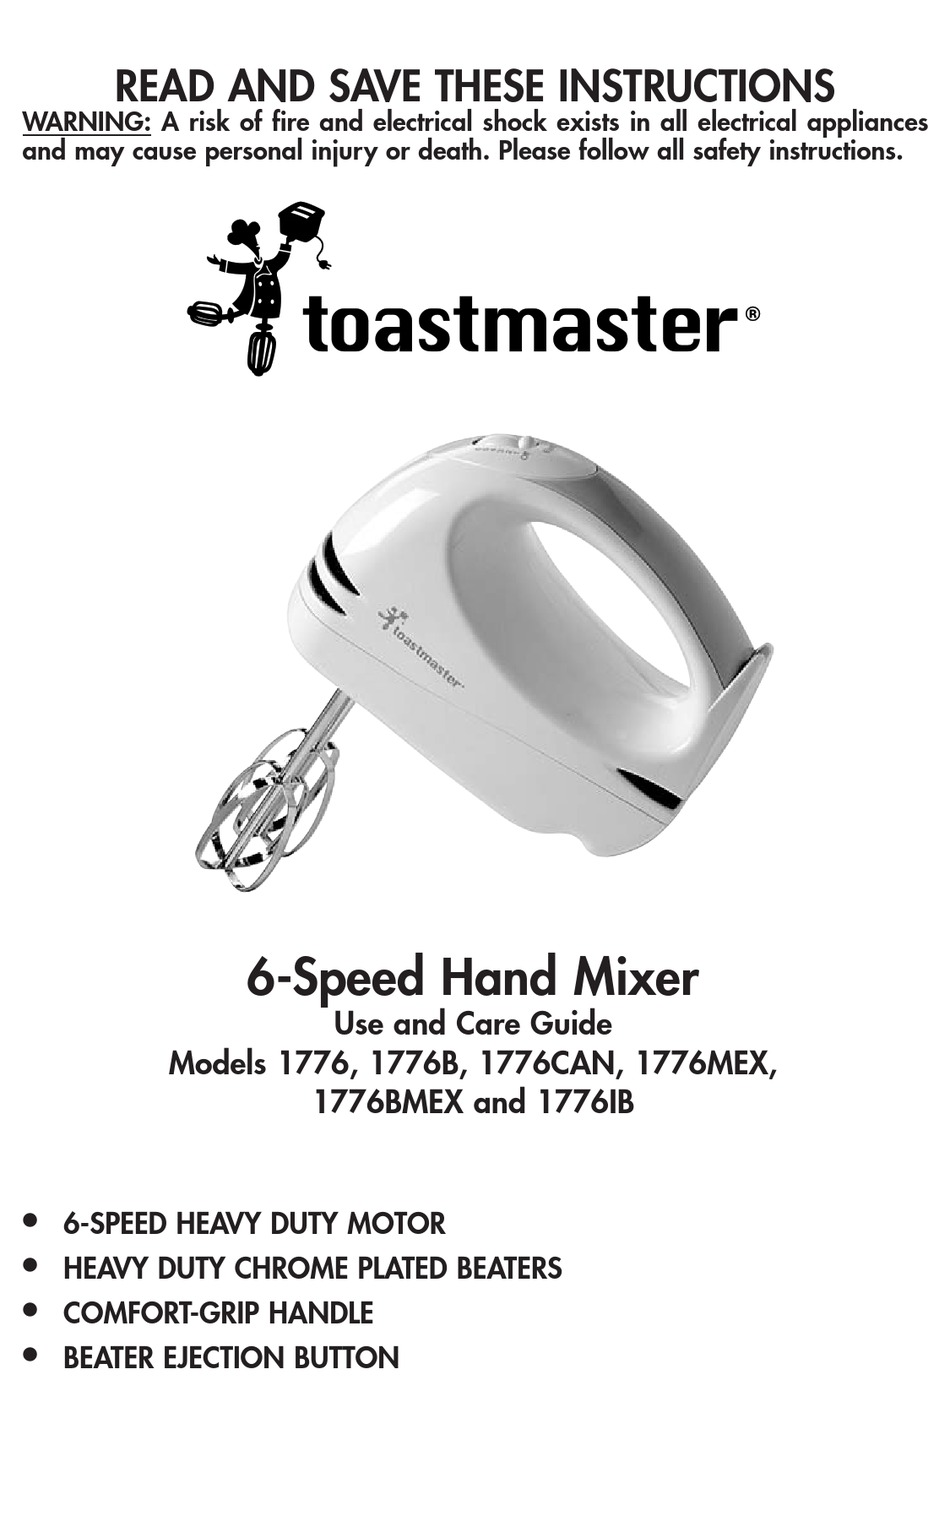 Toastmaster TM-201HM 5-Speed Hand Mixer, Black 